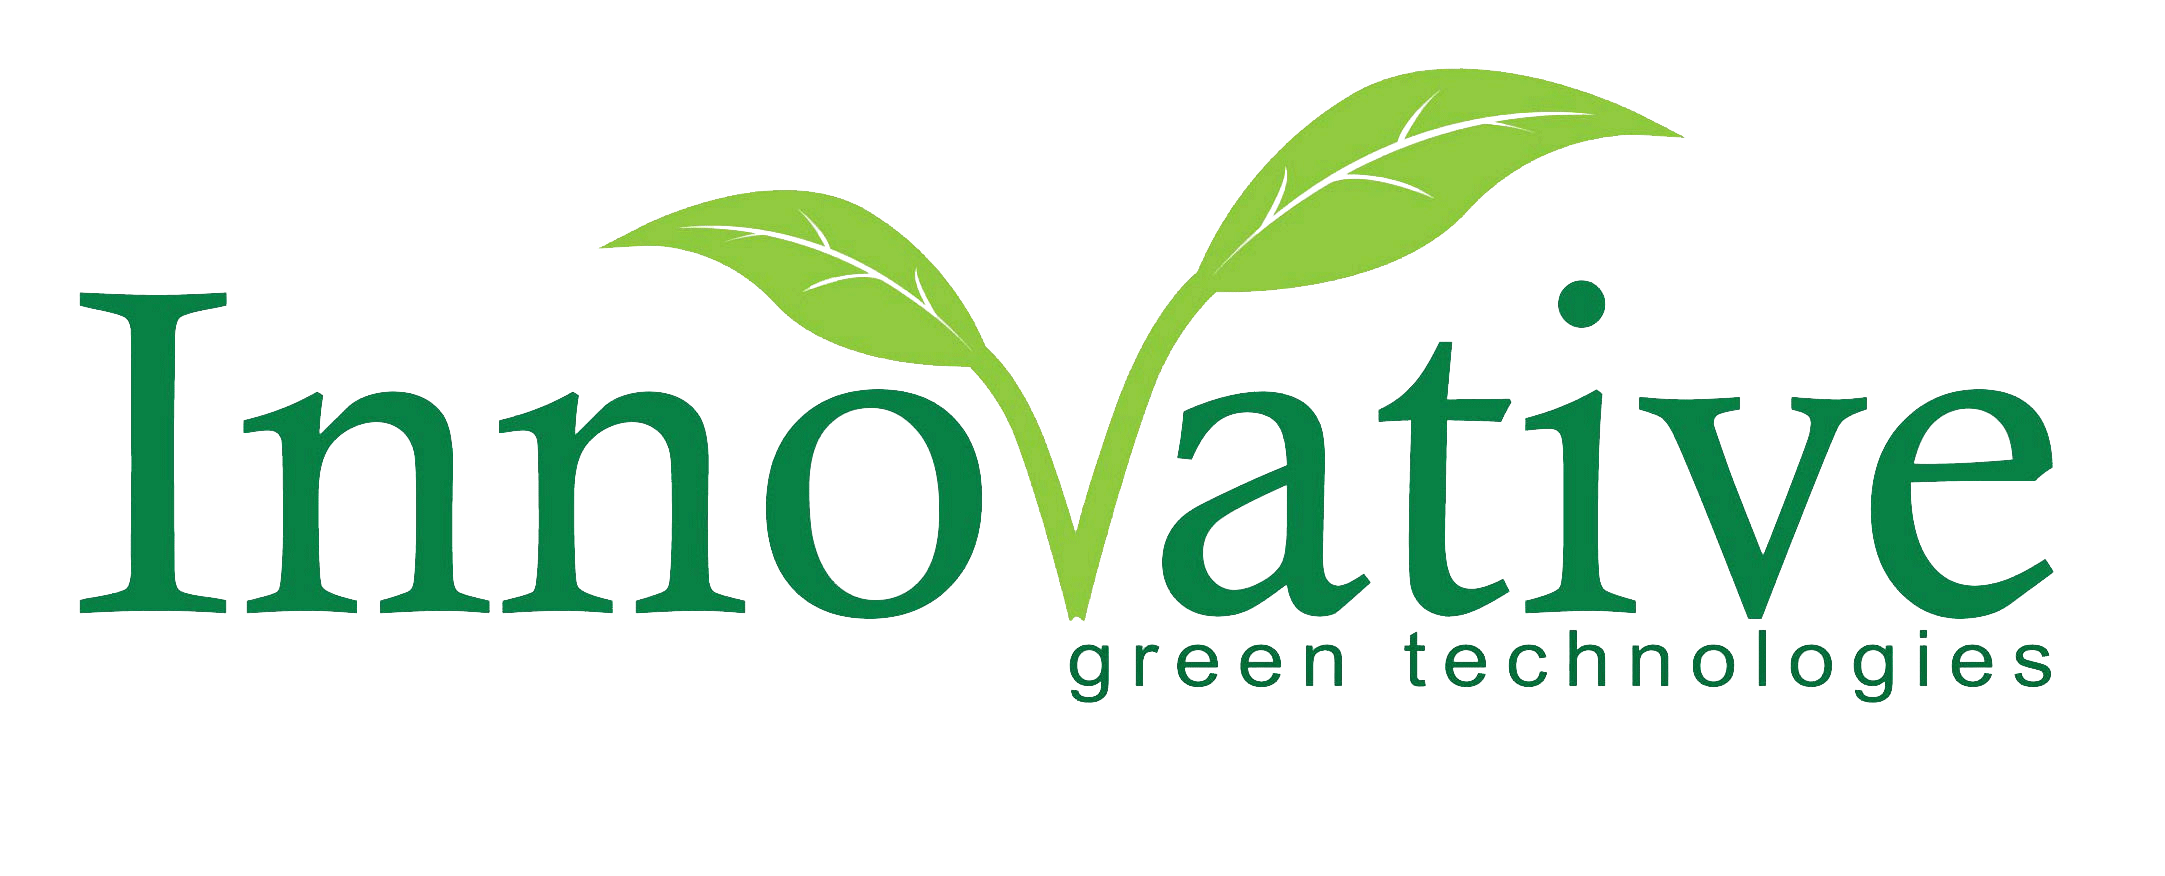 Green Technology Logo - Innovative Green Technologies – Innovative Green Technologies is a ...